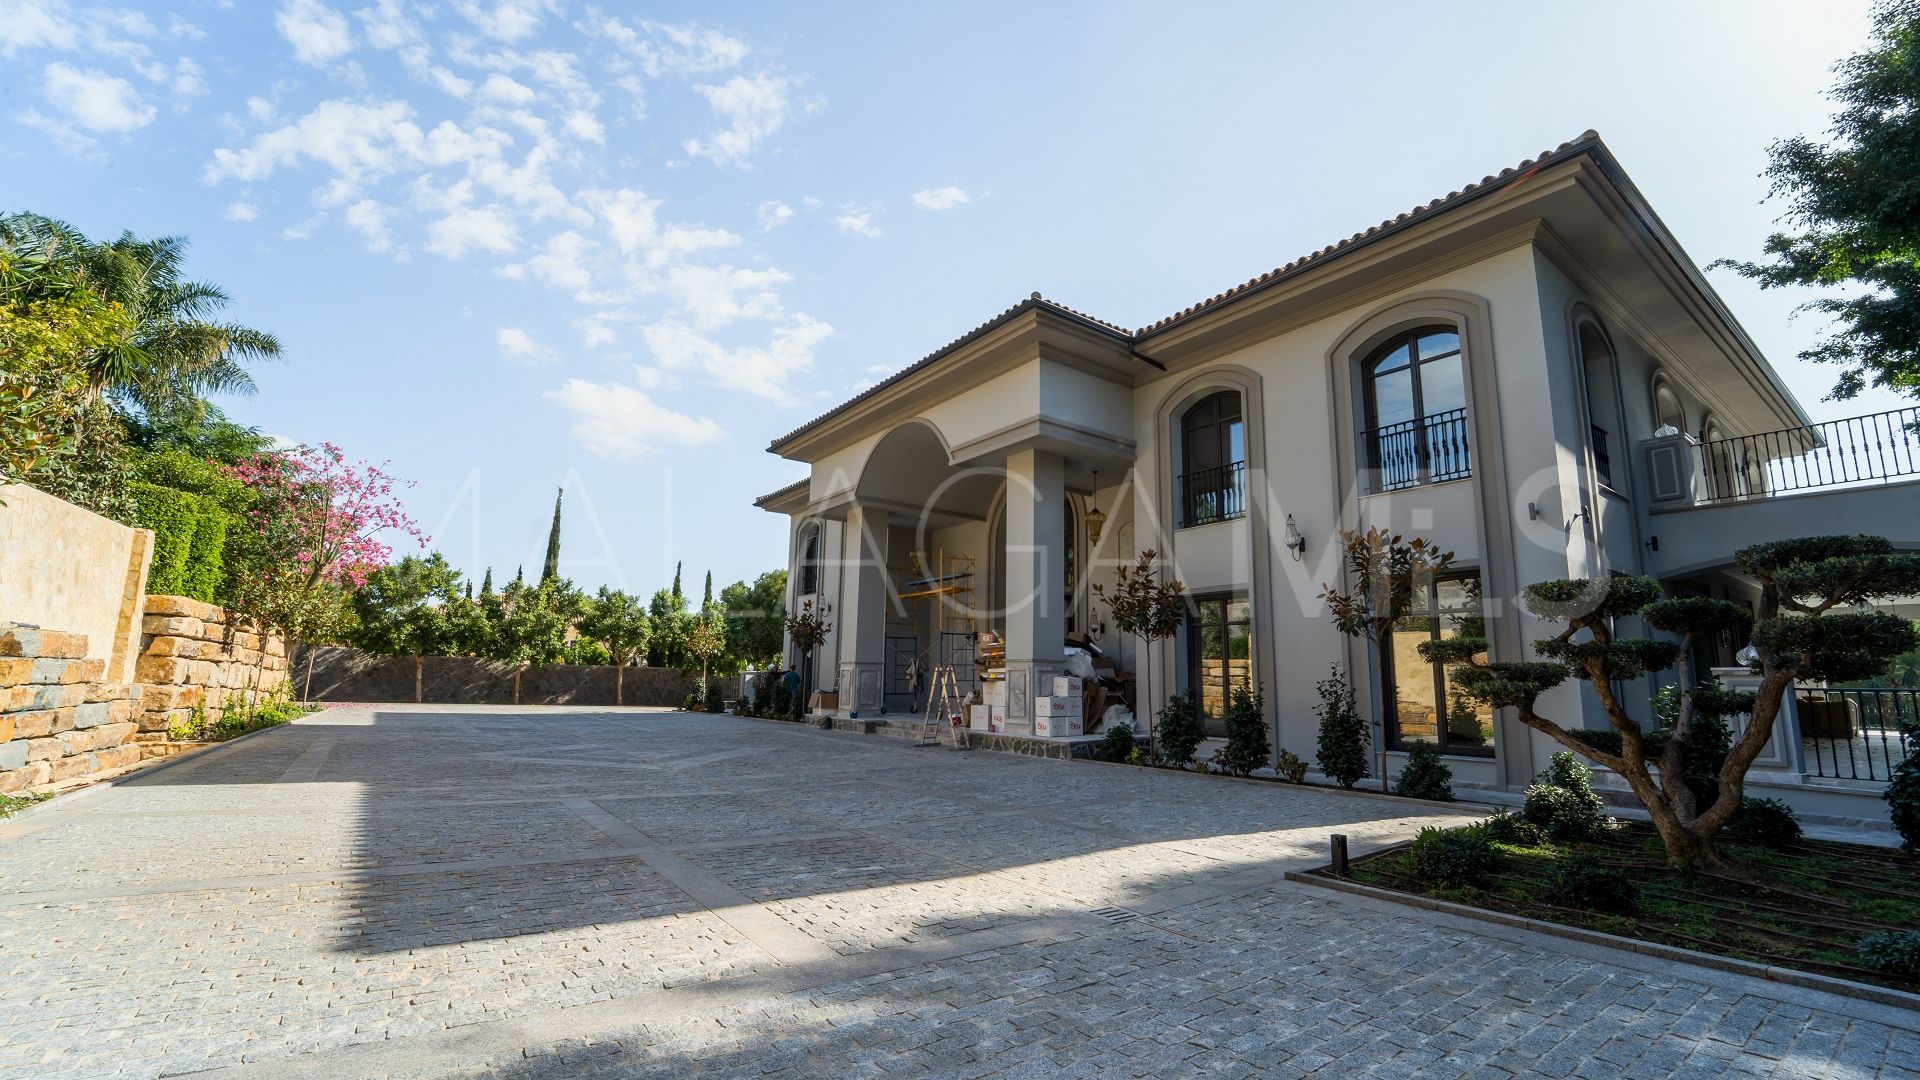 Mansion for sale in Sierra Blanca